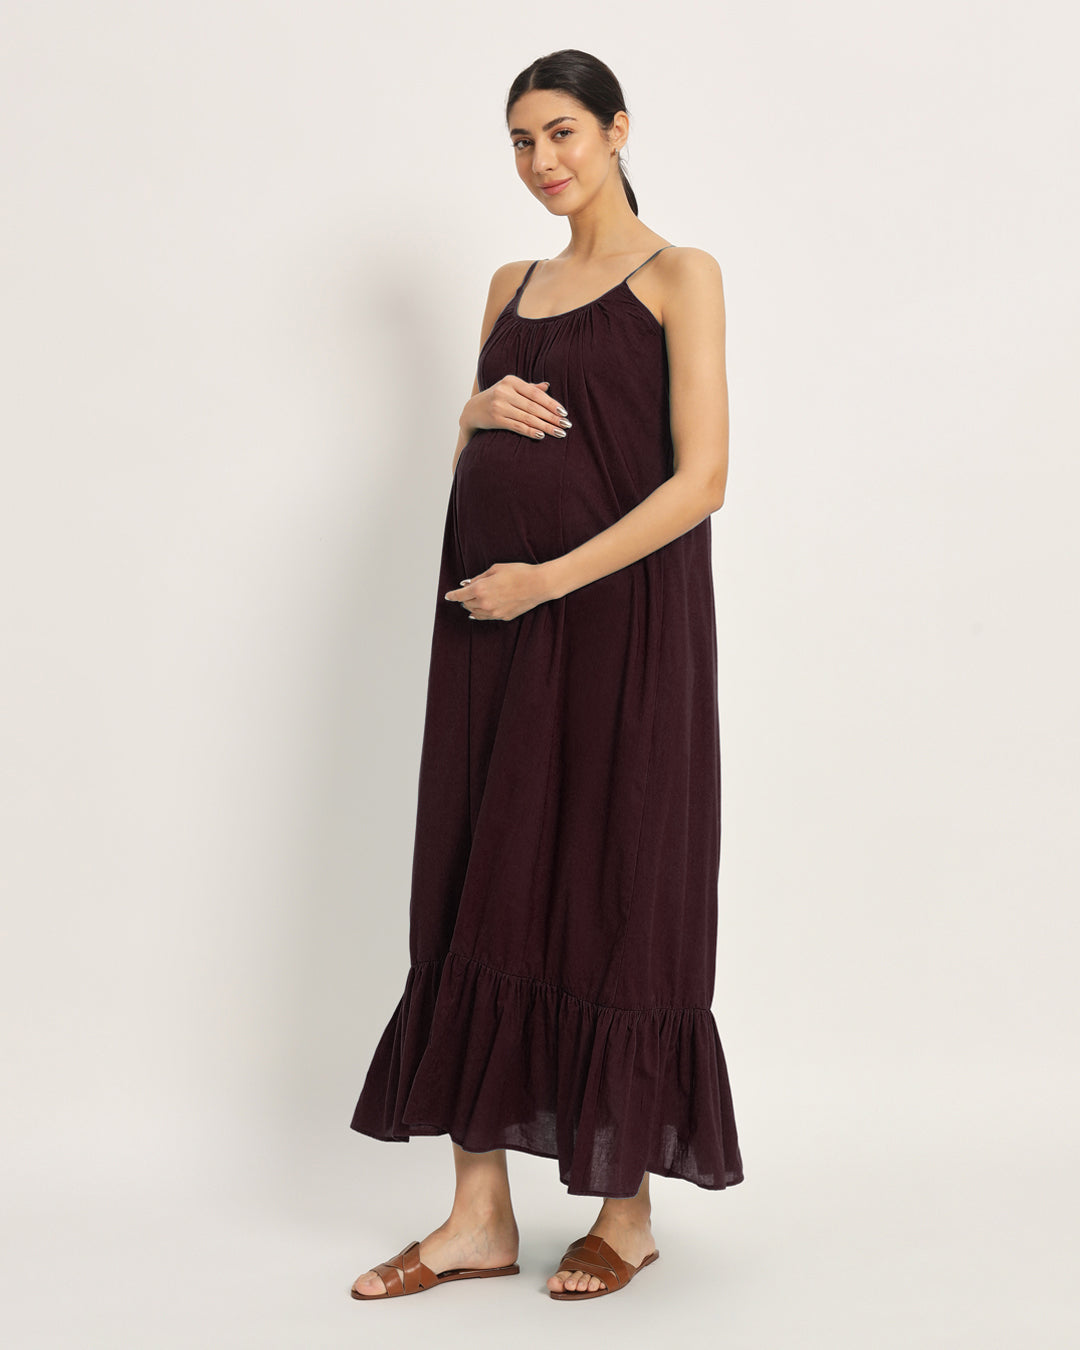 Plum Passion Belly Laugh Maternity & Nursing Dress